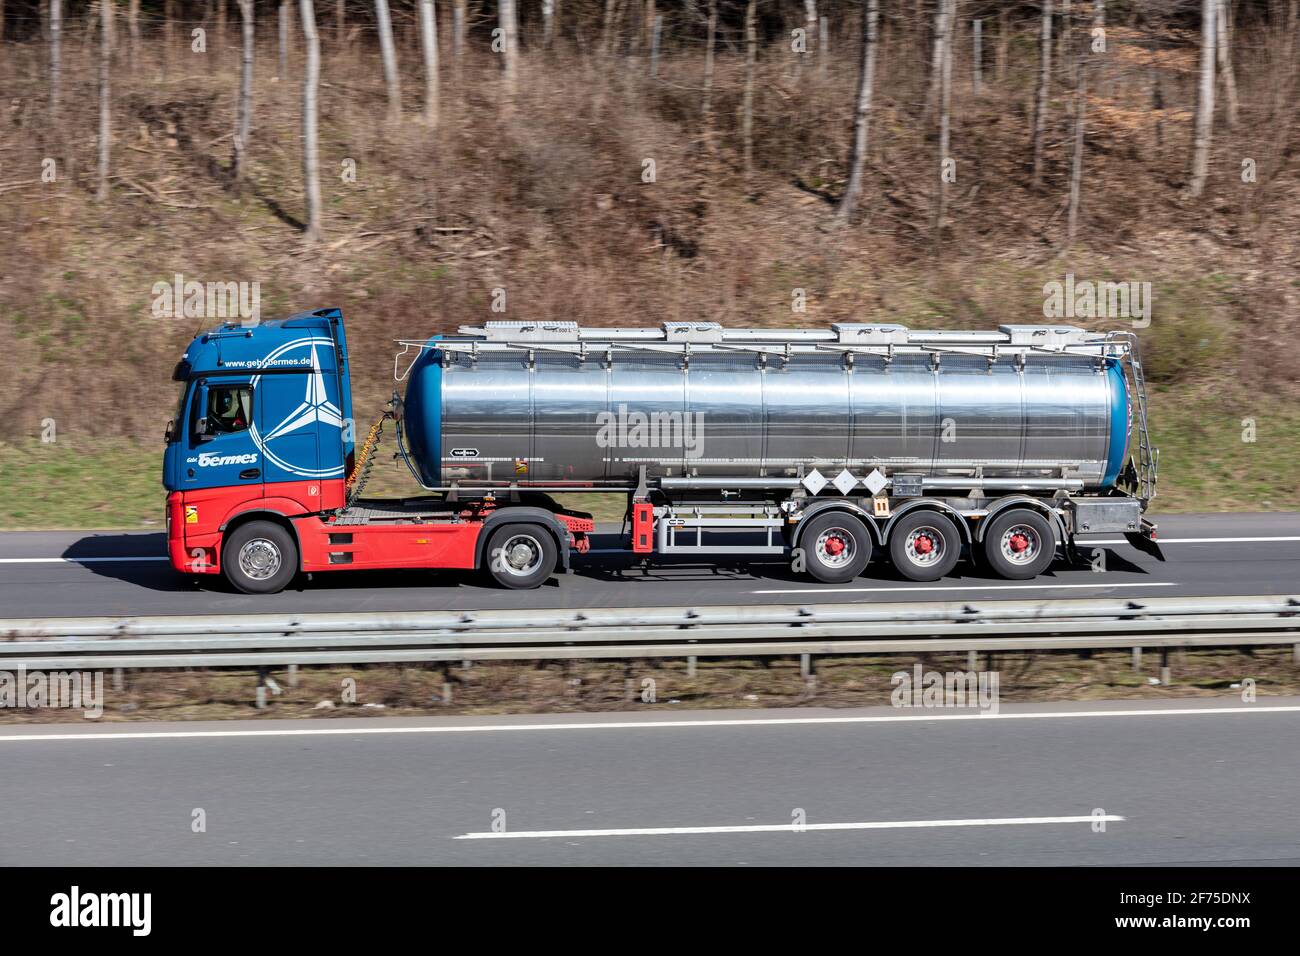 Bermes Mercedes-Benz truck with tank trailer on motorway. Stock Photo